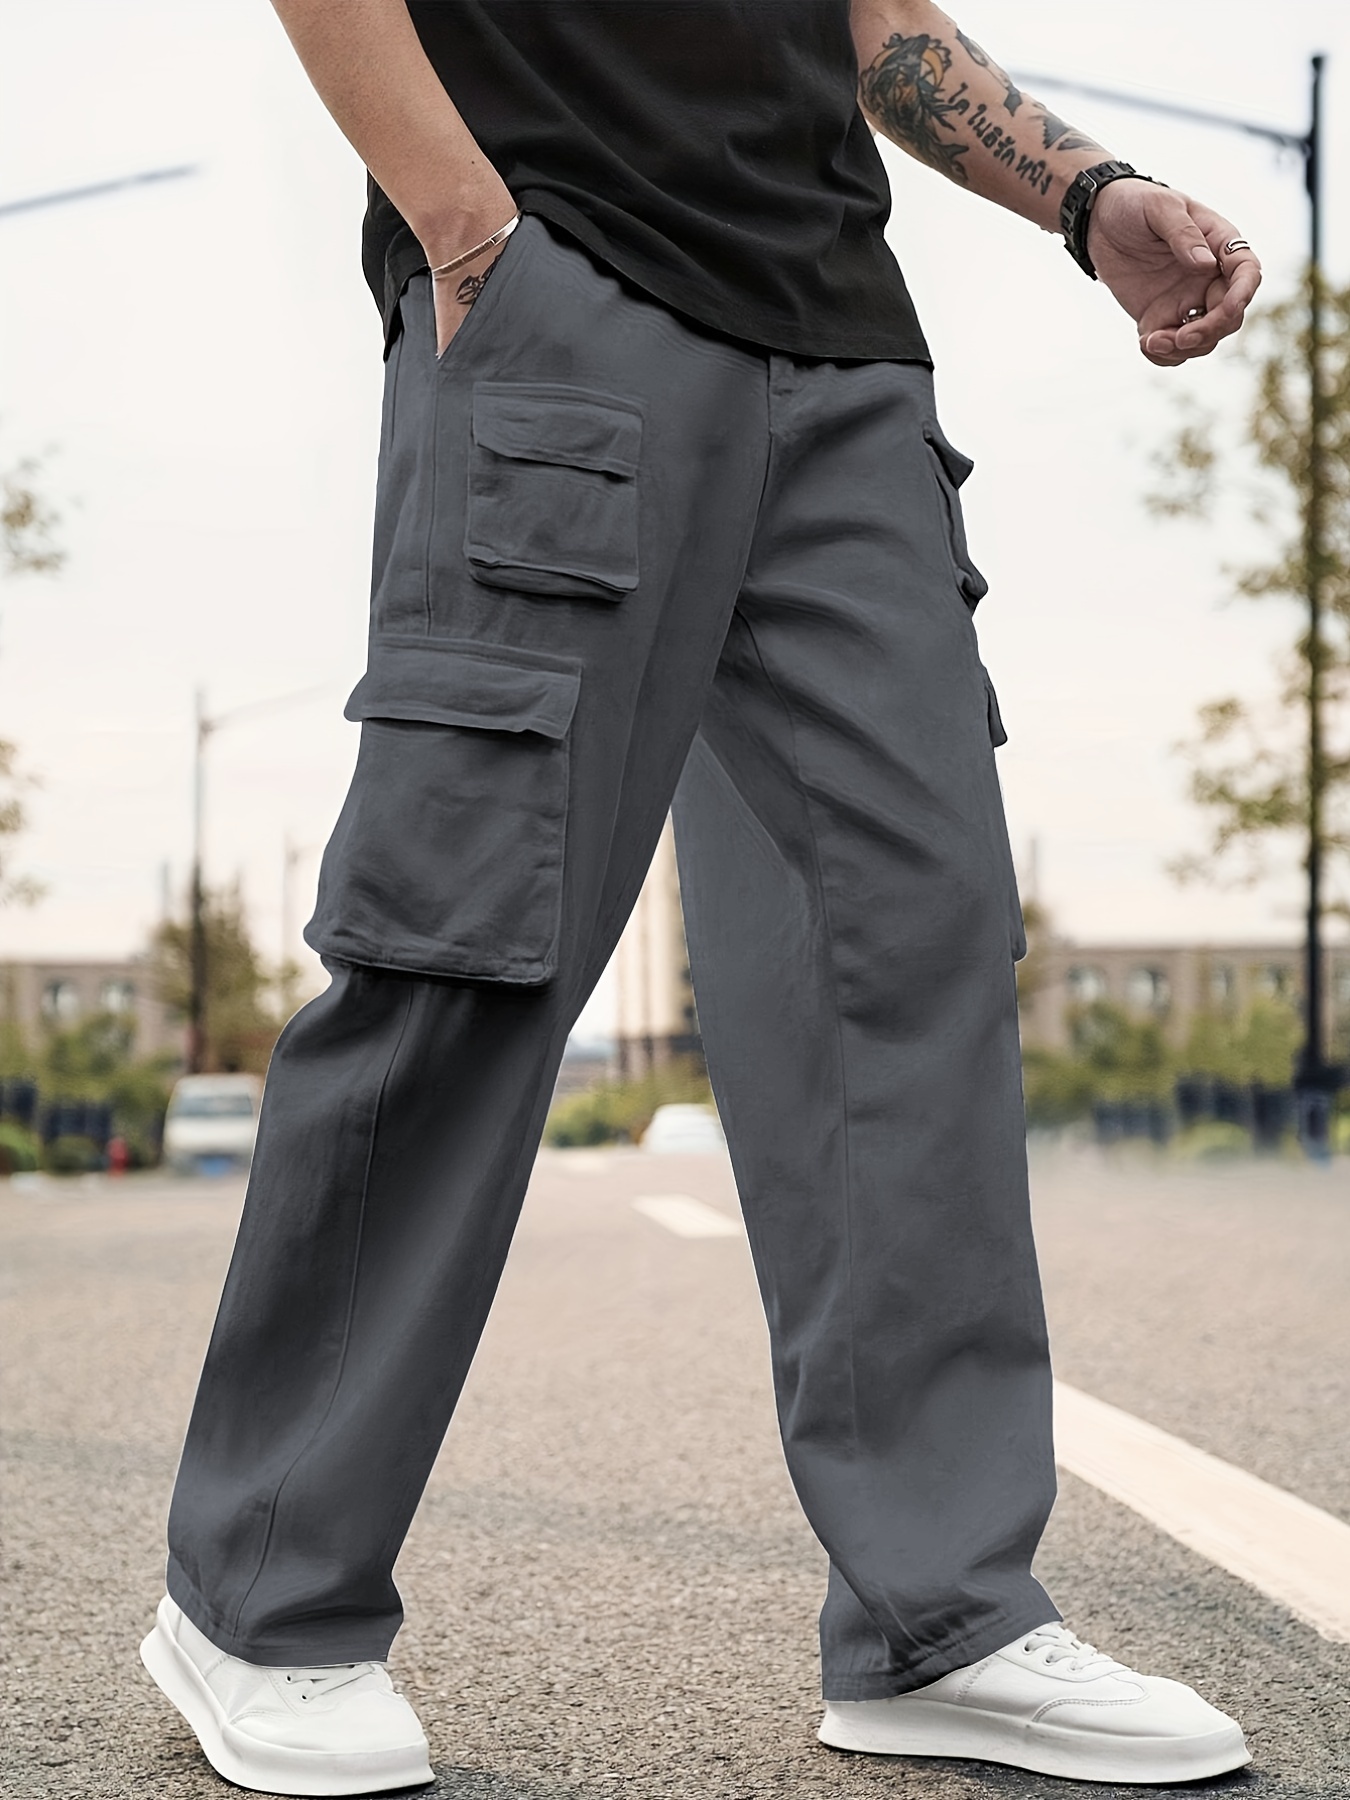 Men's Casual Multi Pocket Cargo Pants Outdoor Hiking Sport Pants Combat  Trousers 